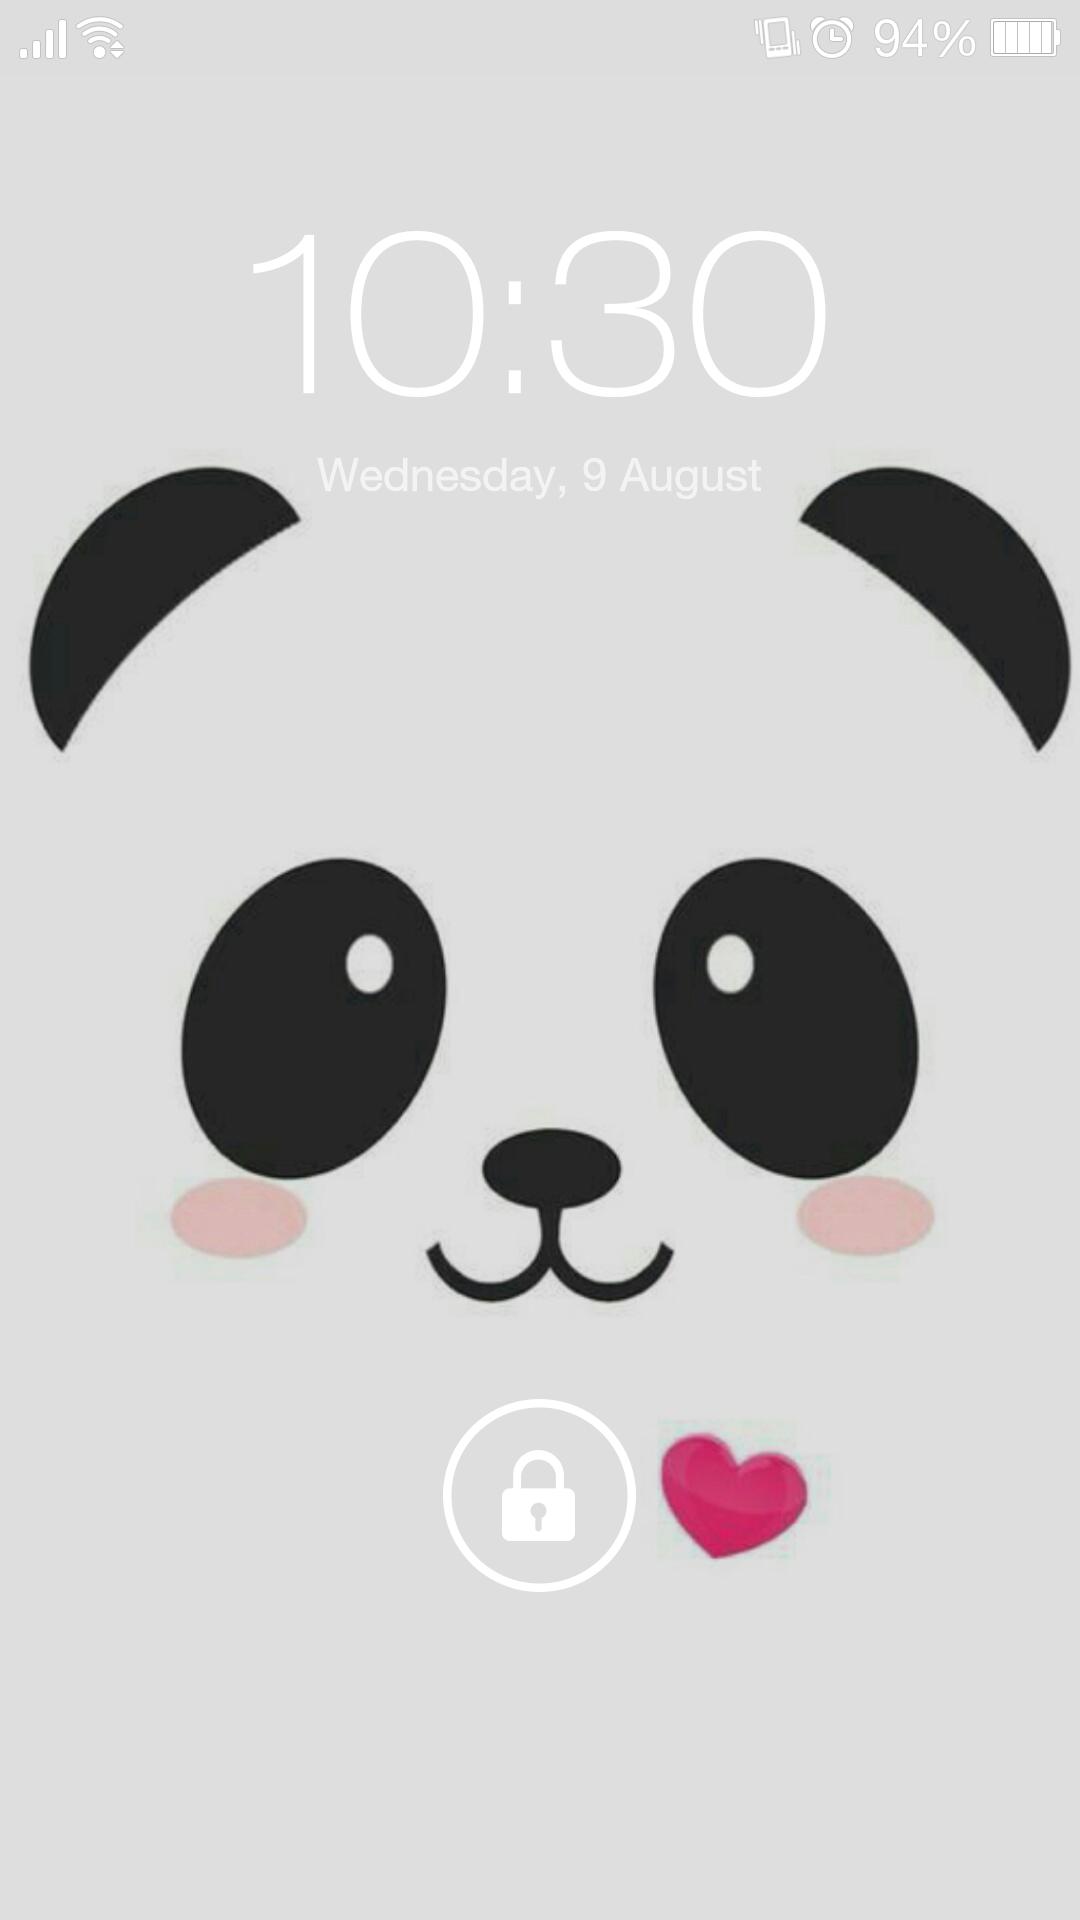 Wallpaper Panda Imut Layar Kunci Qhd For Android Apk Download